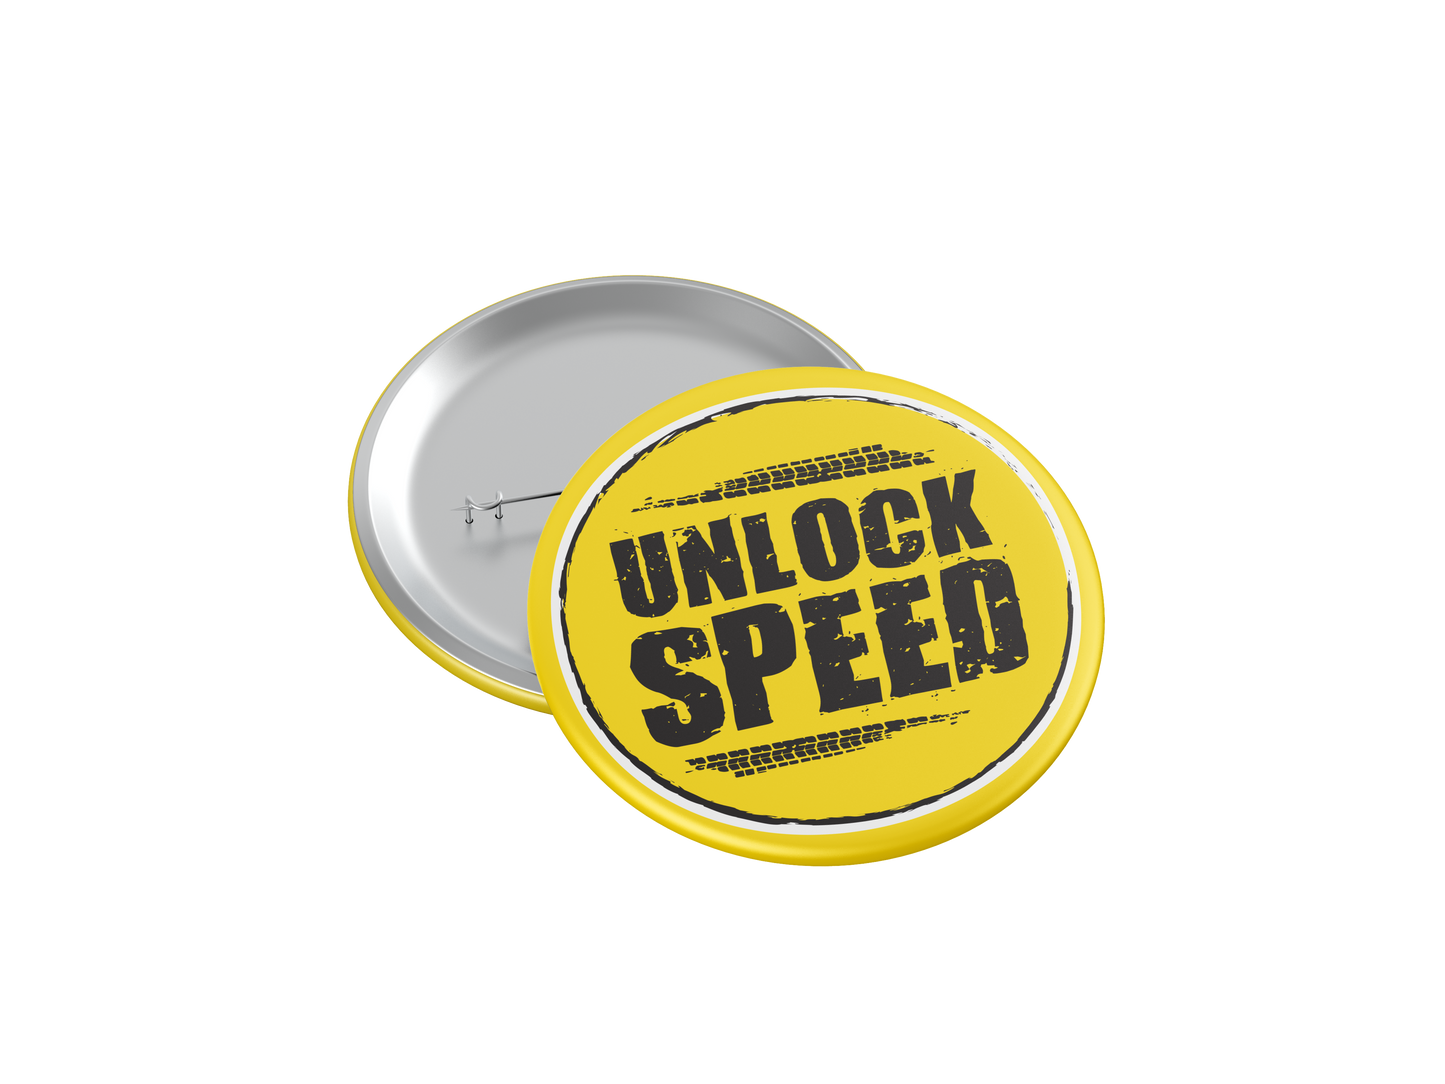 Unlock Speed